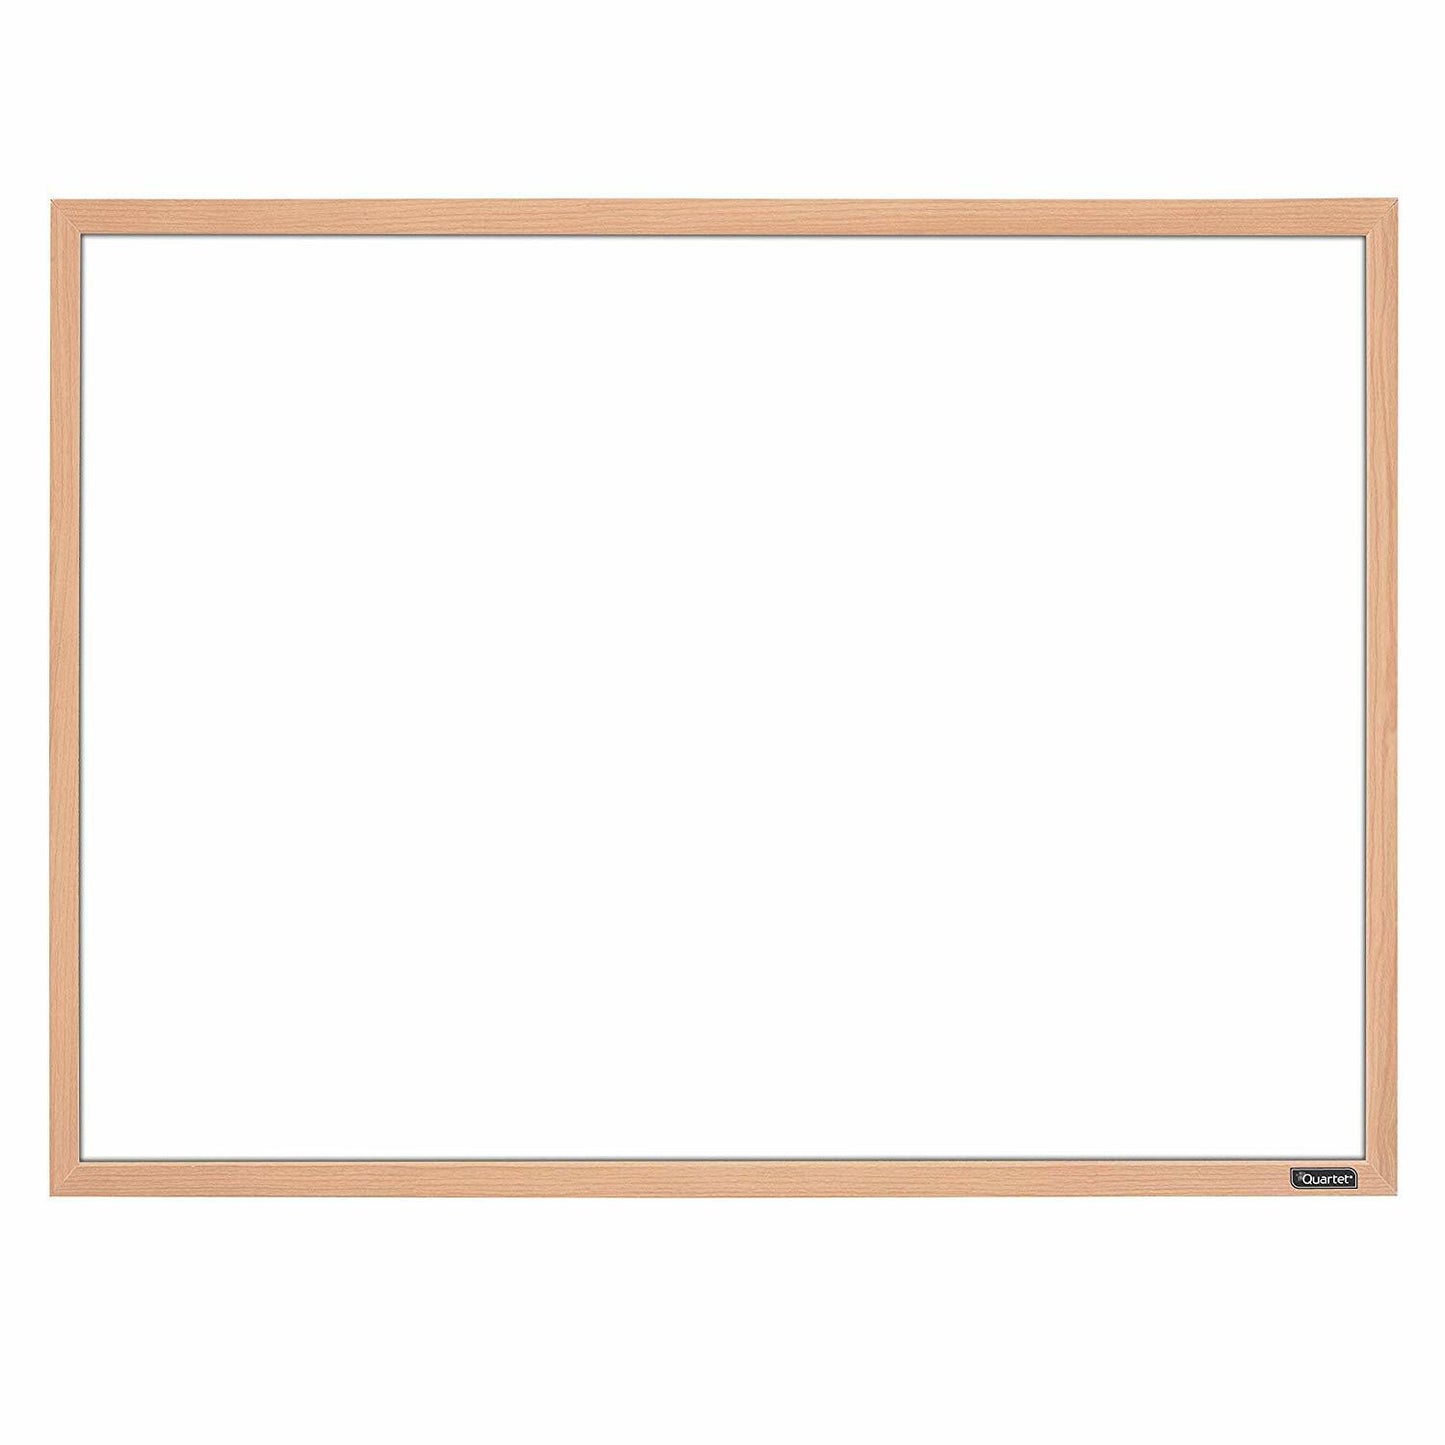 Whiteboard, 17" x 23" Dry Erase Board, Oak Finish Frame